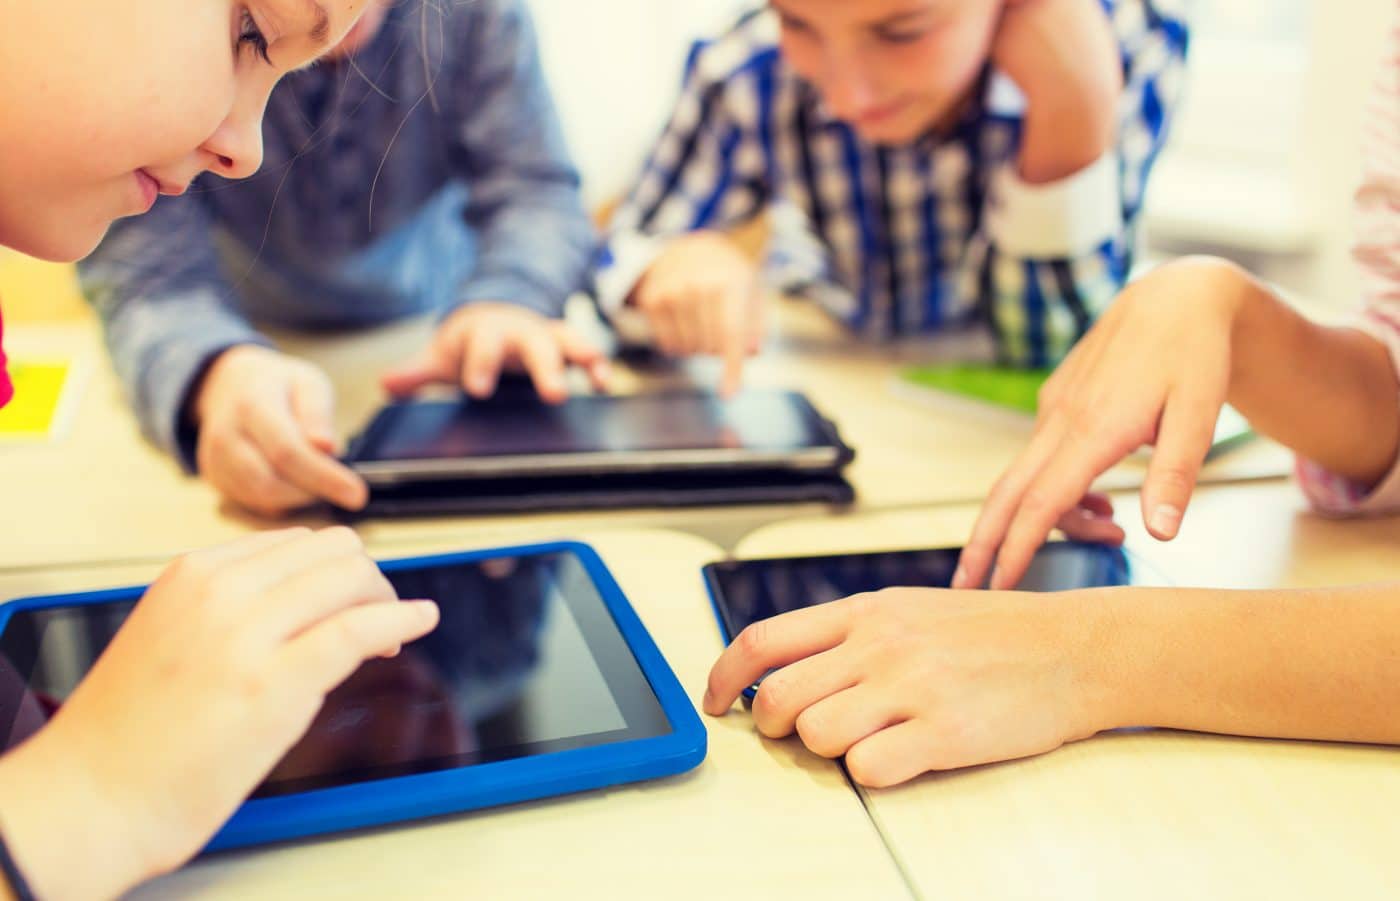 How technologies can improve children’s skills